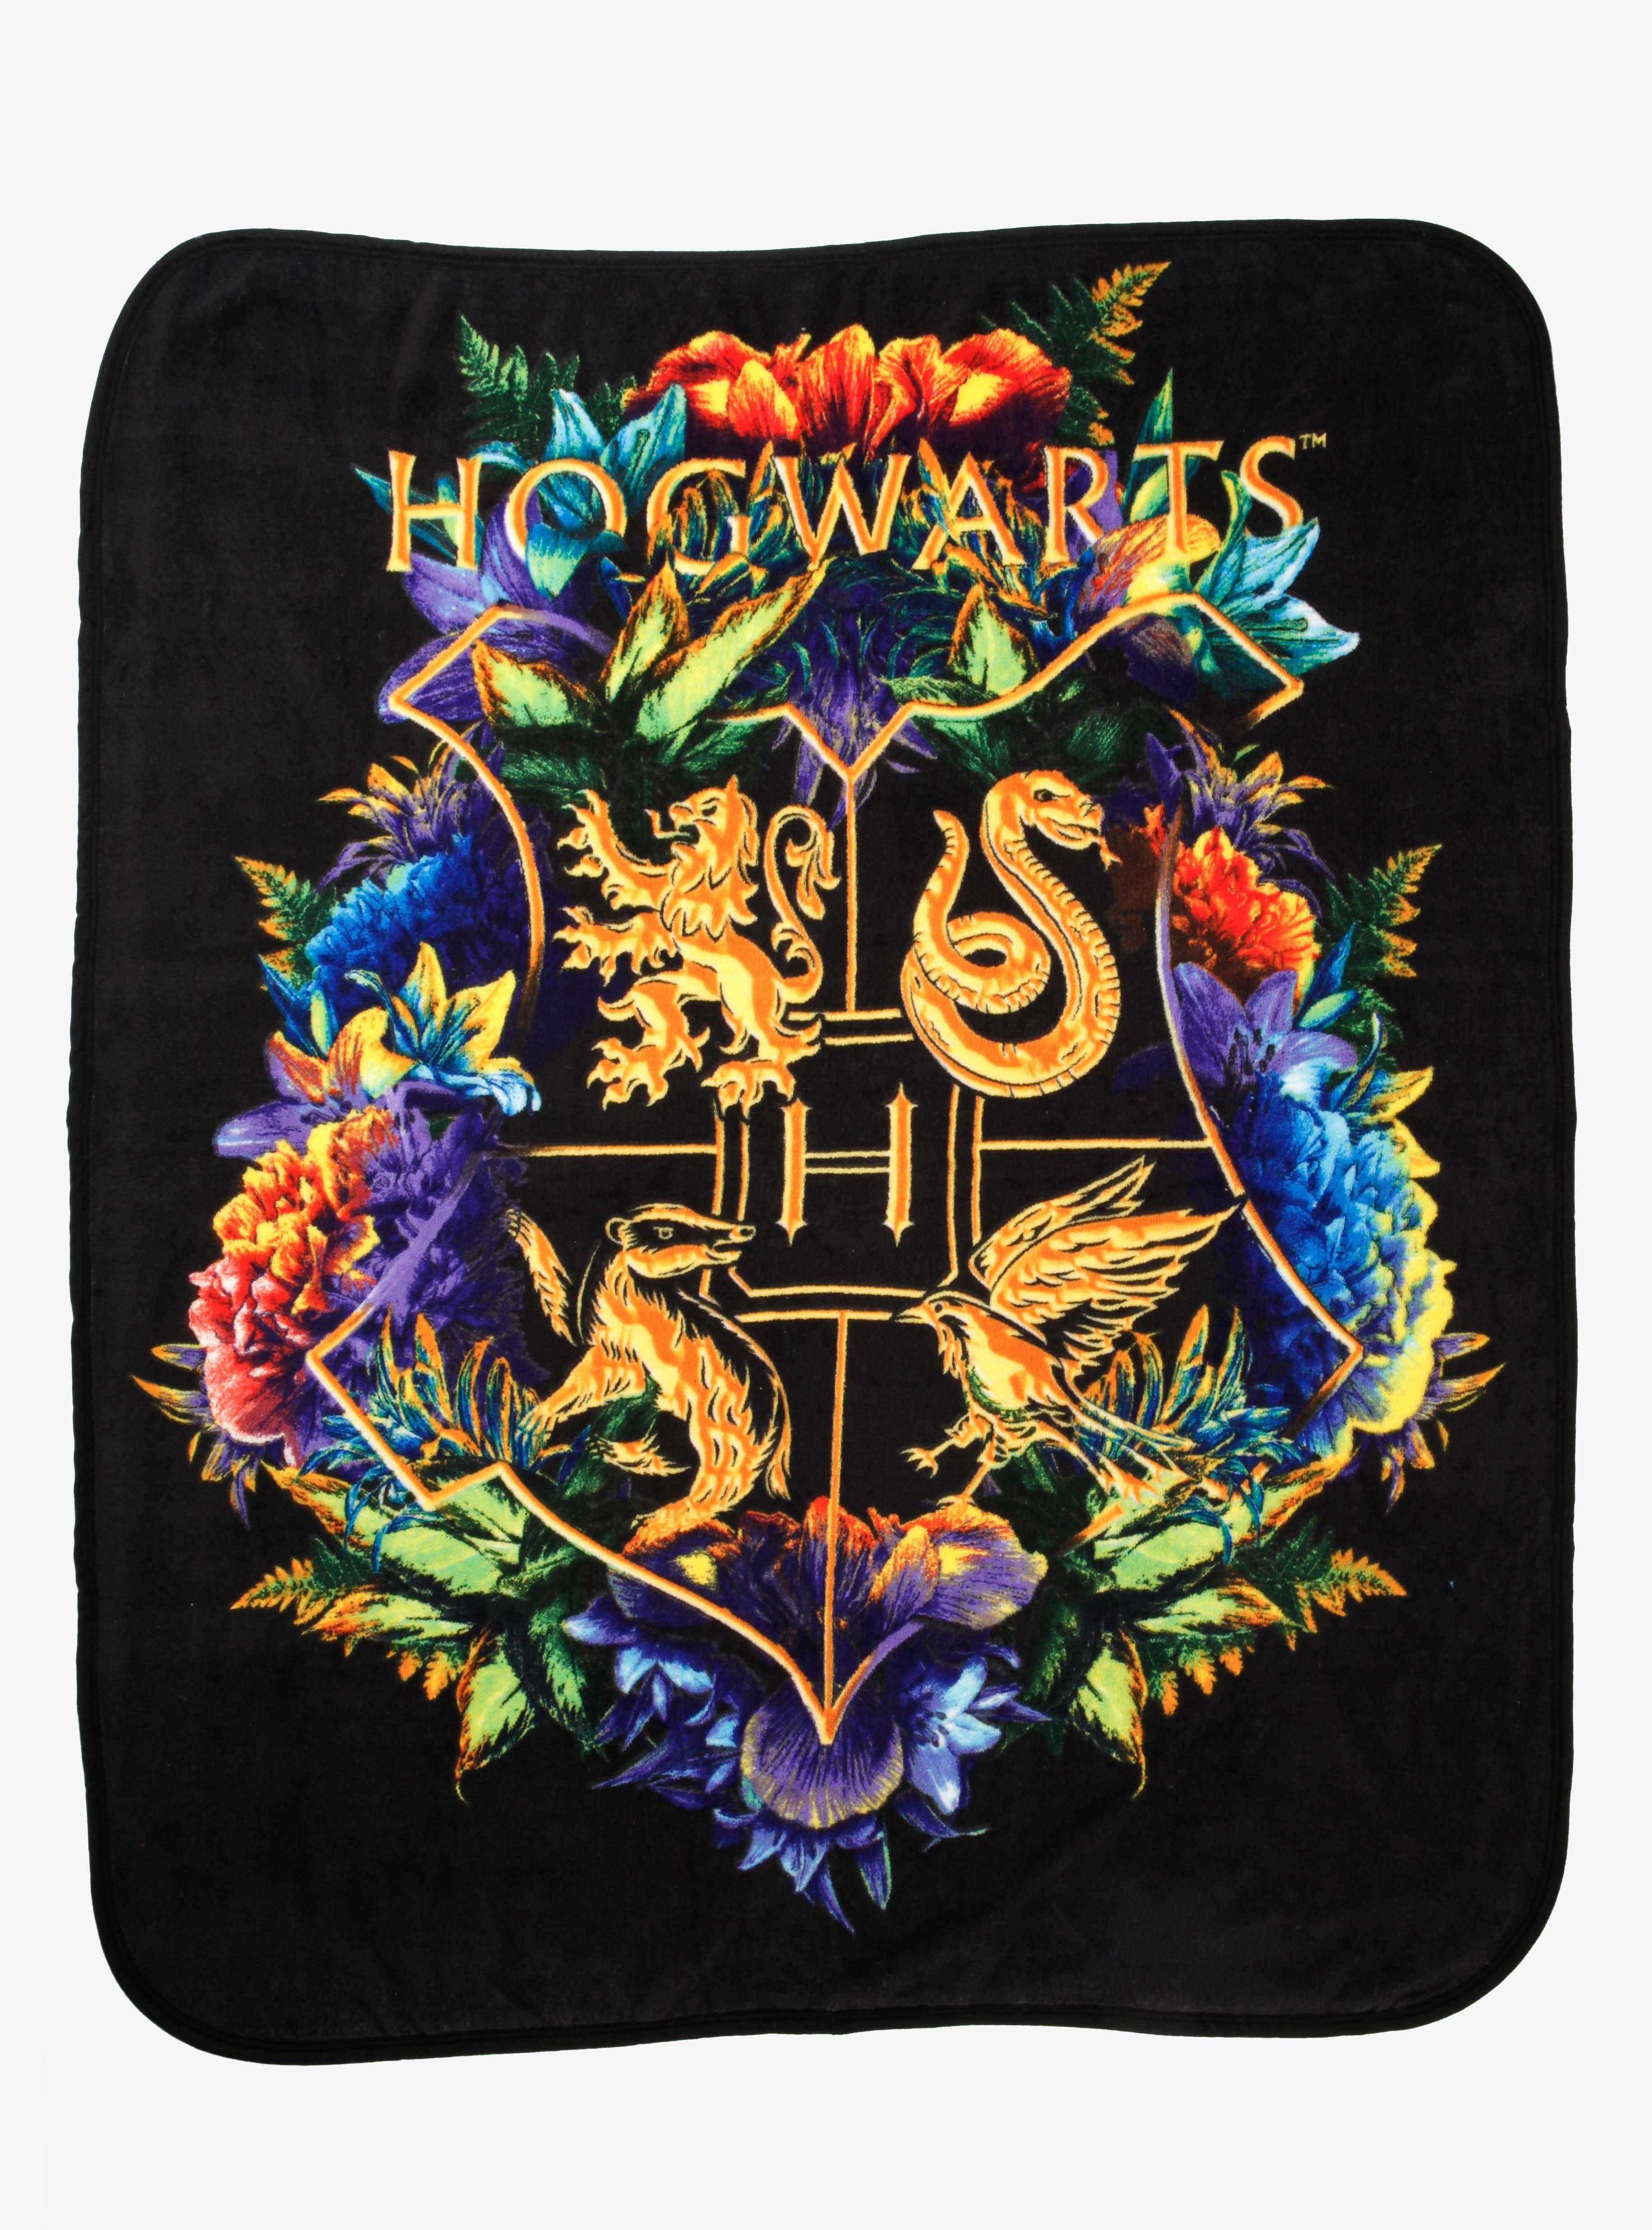  DIAMOND ART CLUB Hogwarts Crest - FINE Oddities Diamond Painting  Kit, Beige, 17 x 24 (43 cm x 61 cm) : Arts, Crafts & Sewing